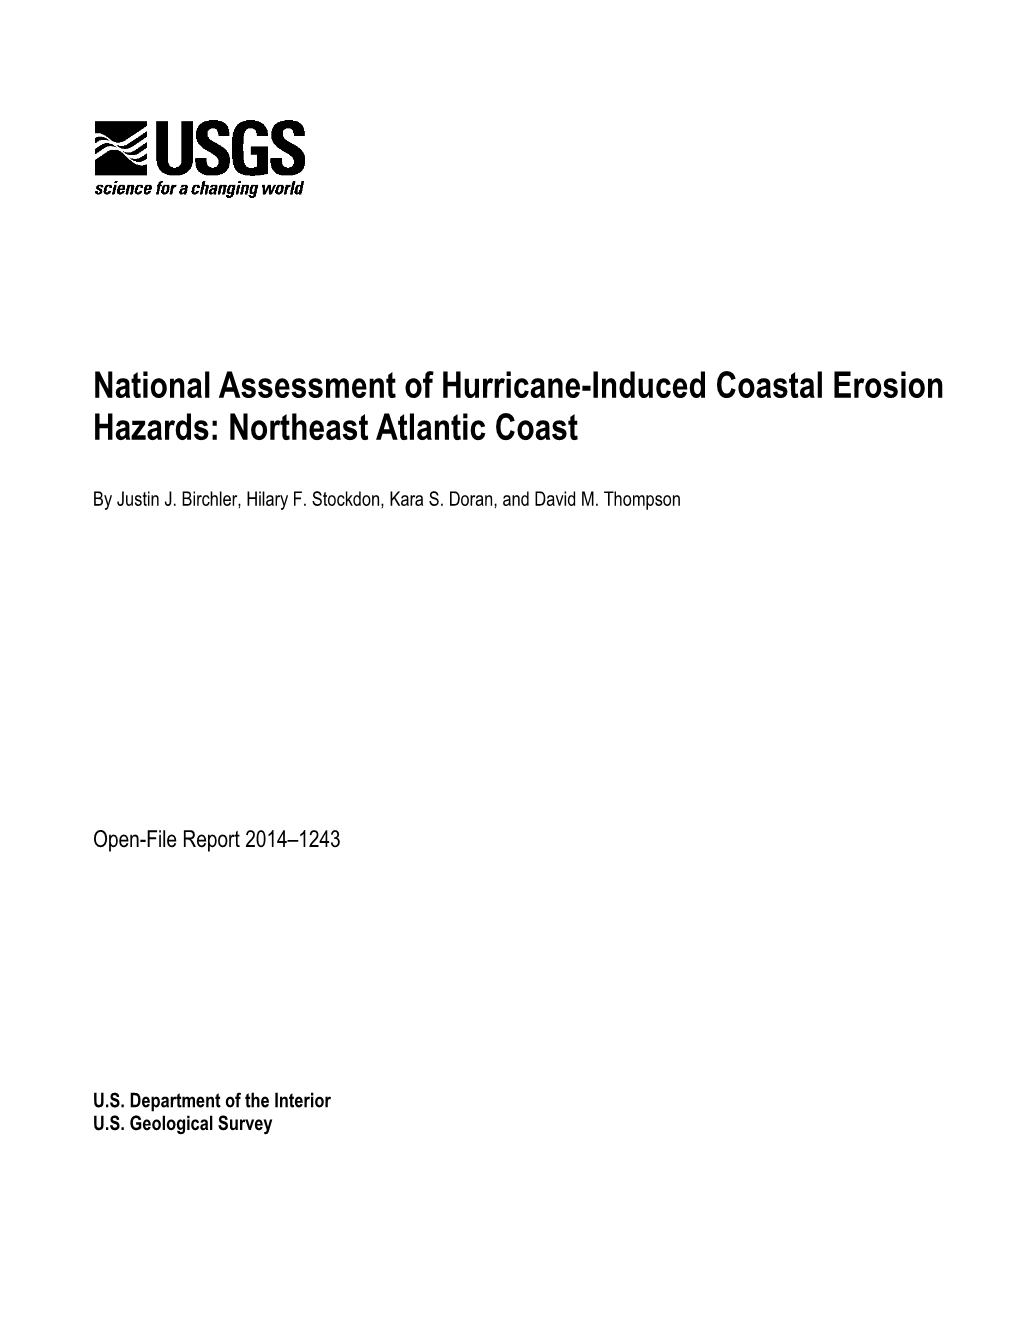 National Assessment of Hurricane-Induced Coastal Erosion Hazards: Northeast Atlantic Coast